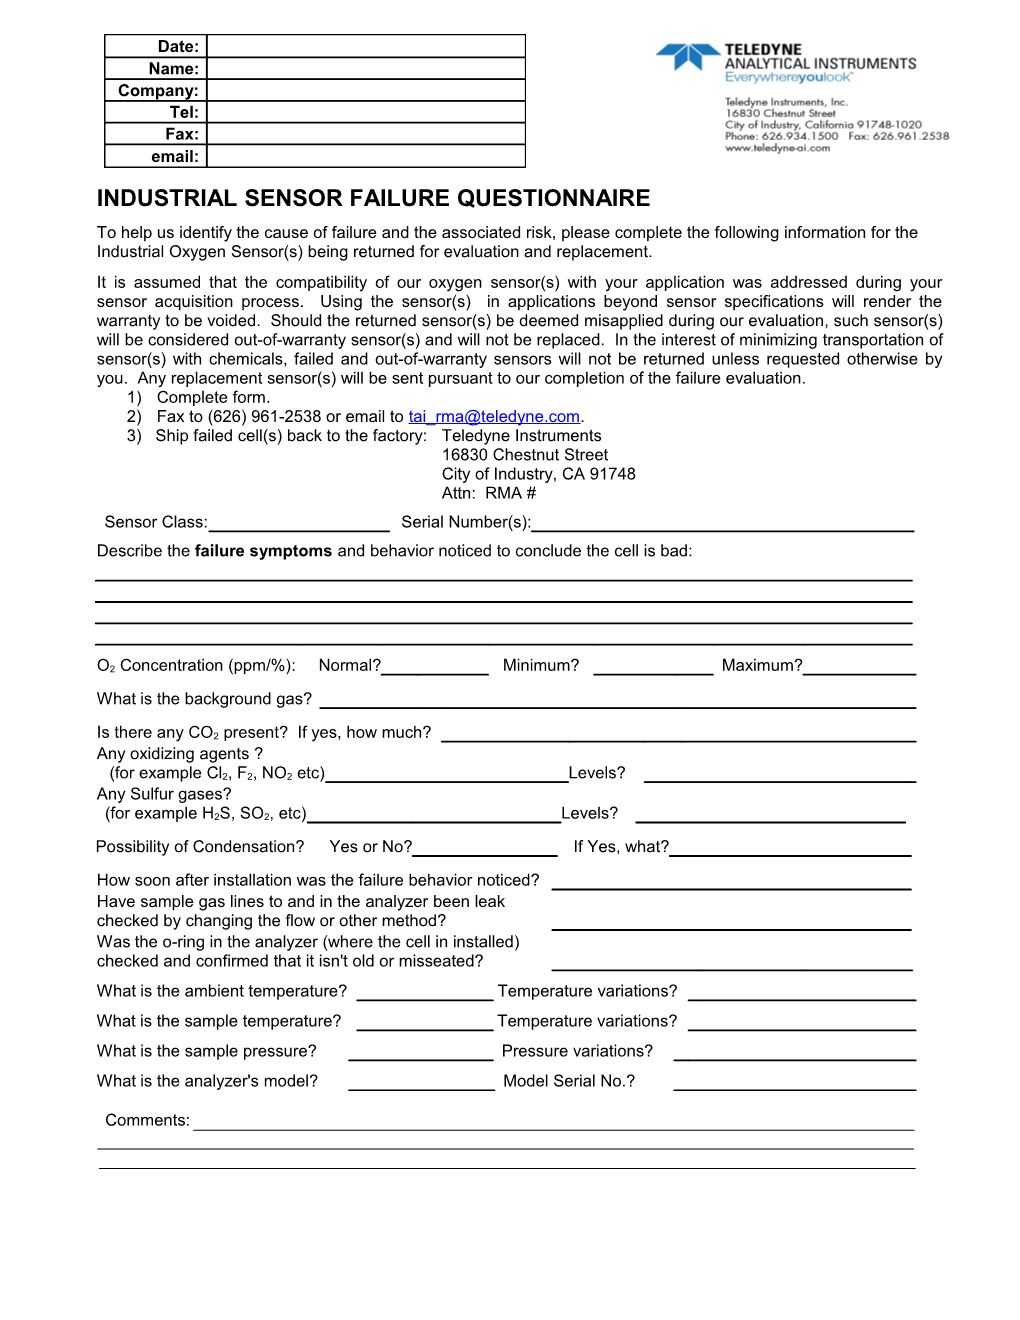 Industrial Sensor Failure Questionnaire